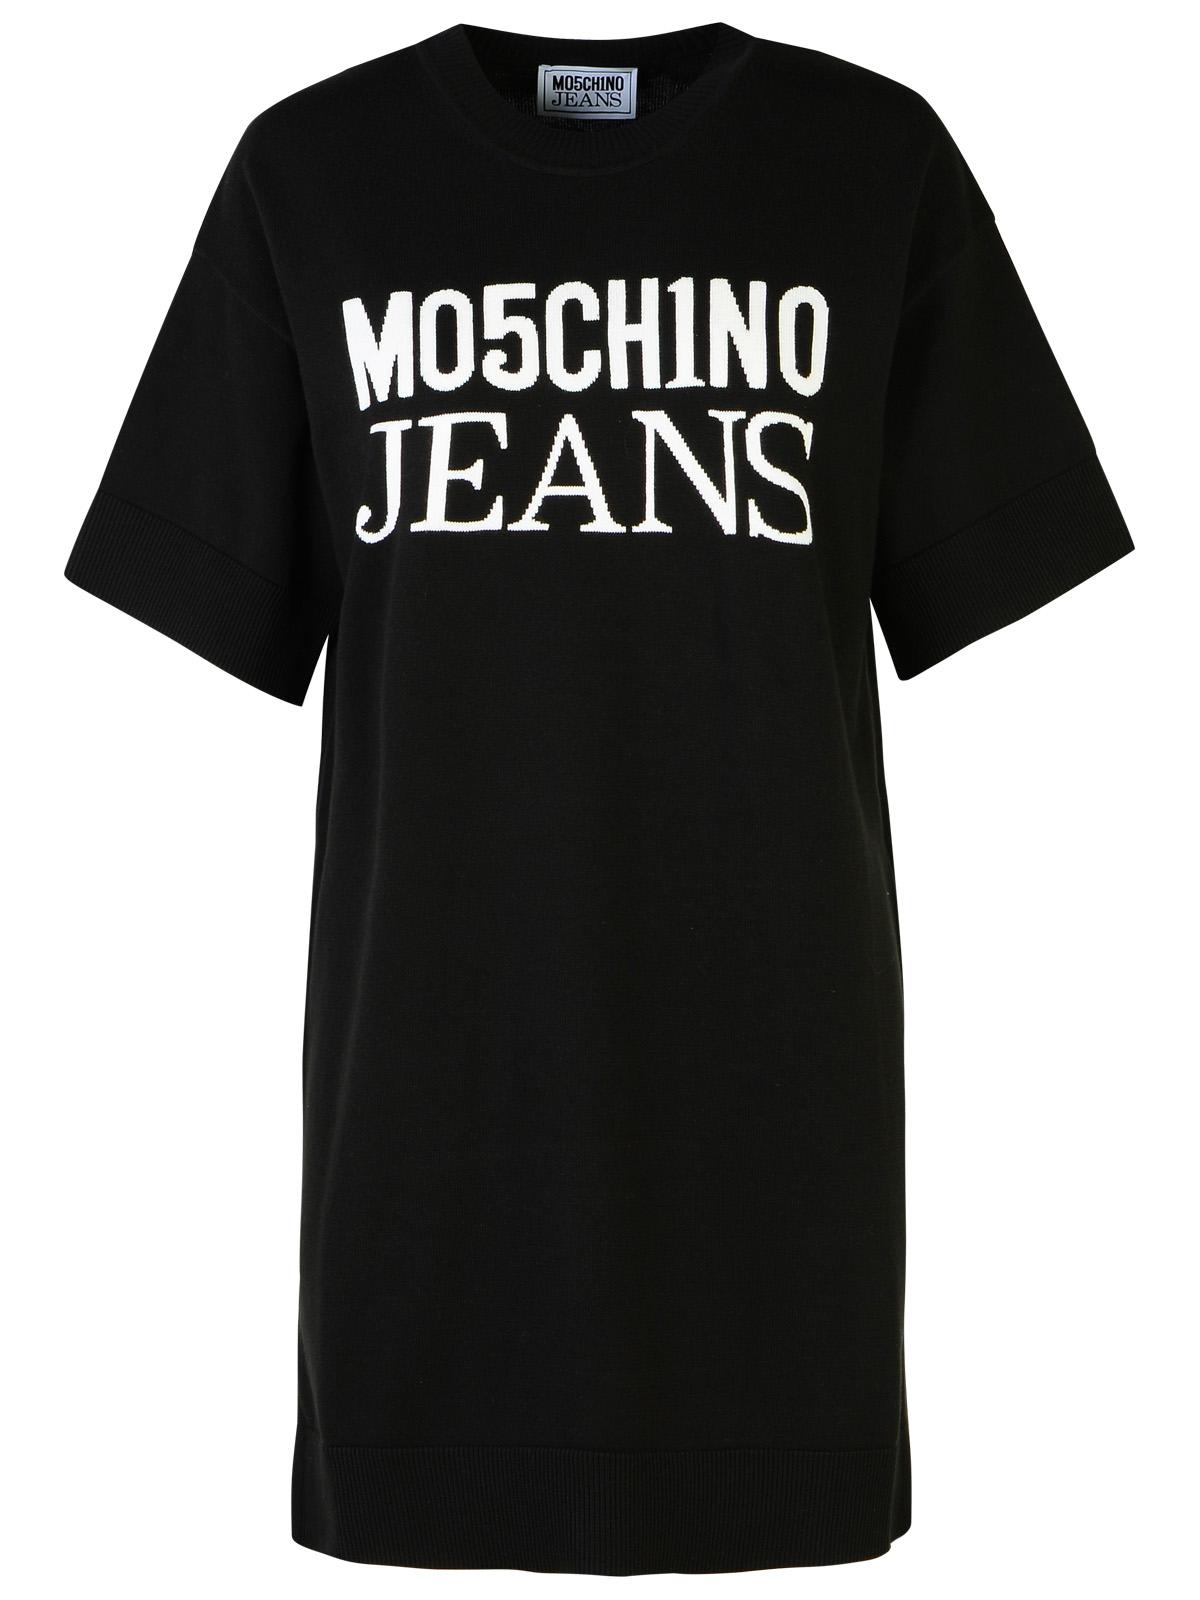 M05ch1n0 Jeans Black Cotton Dress